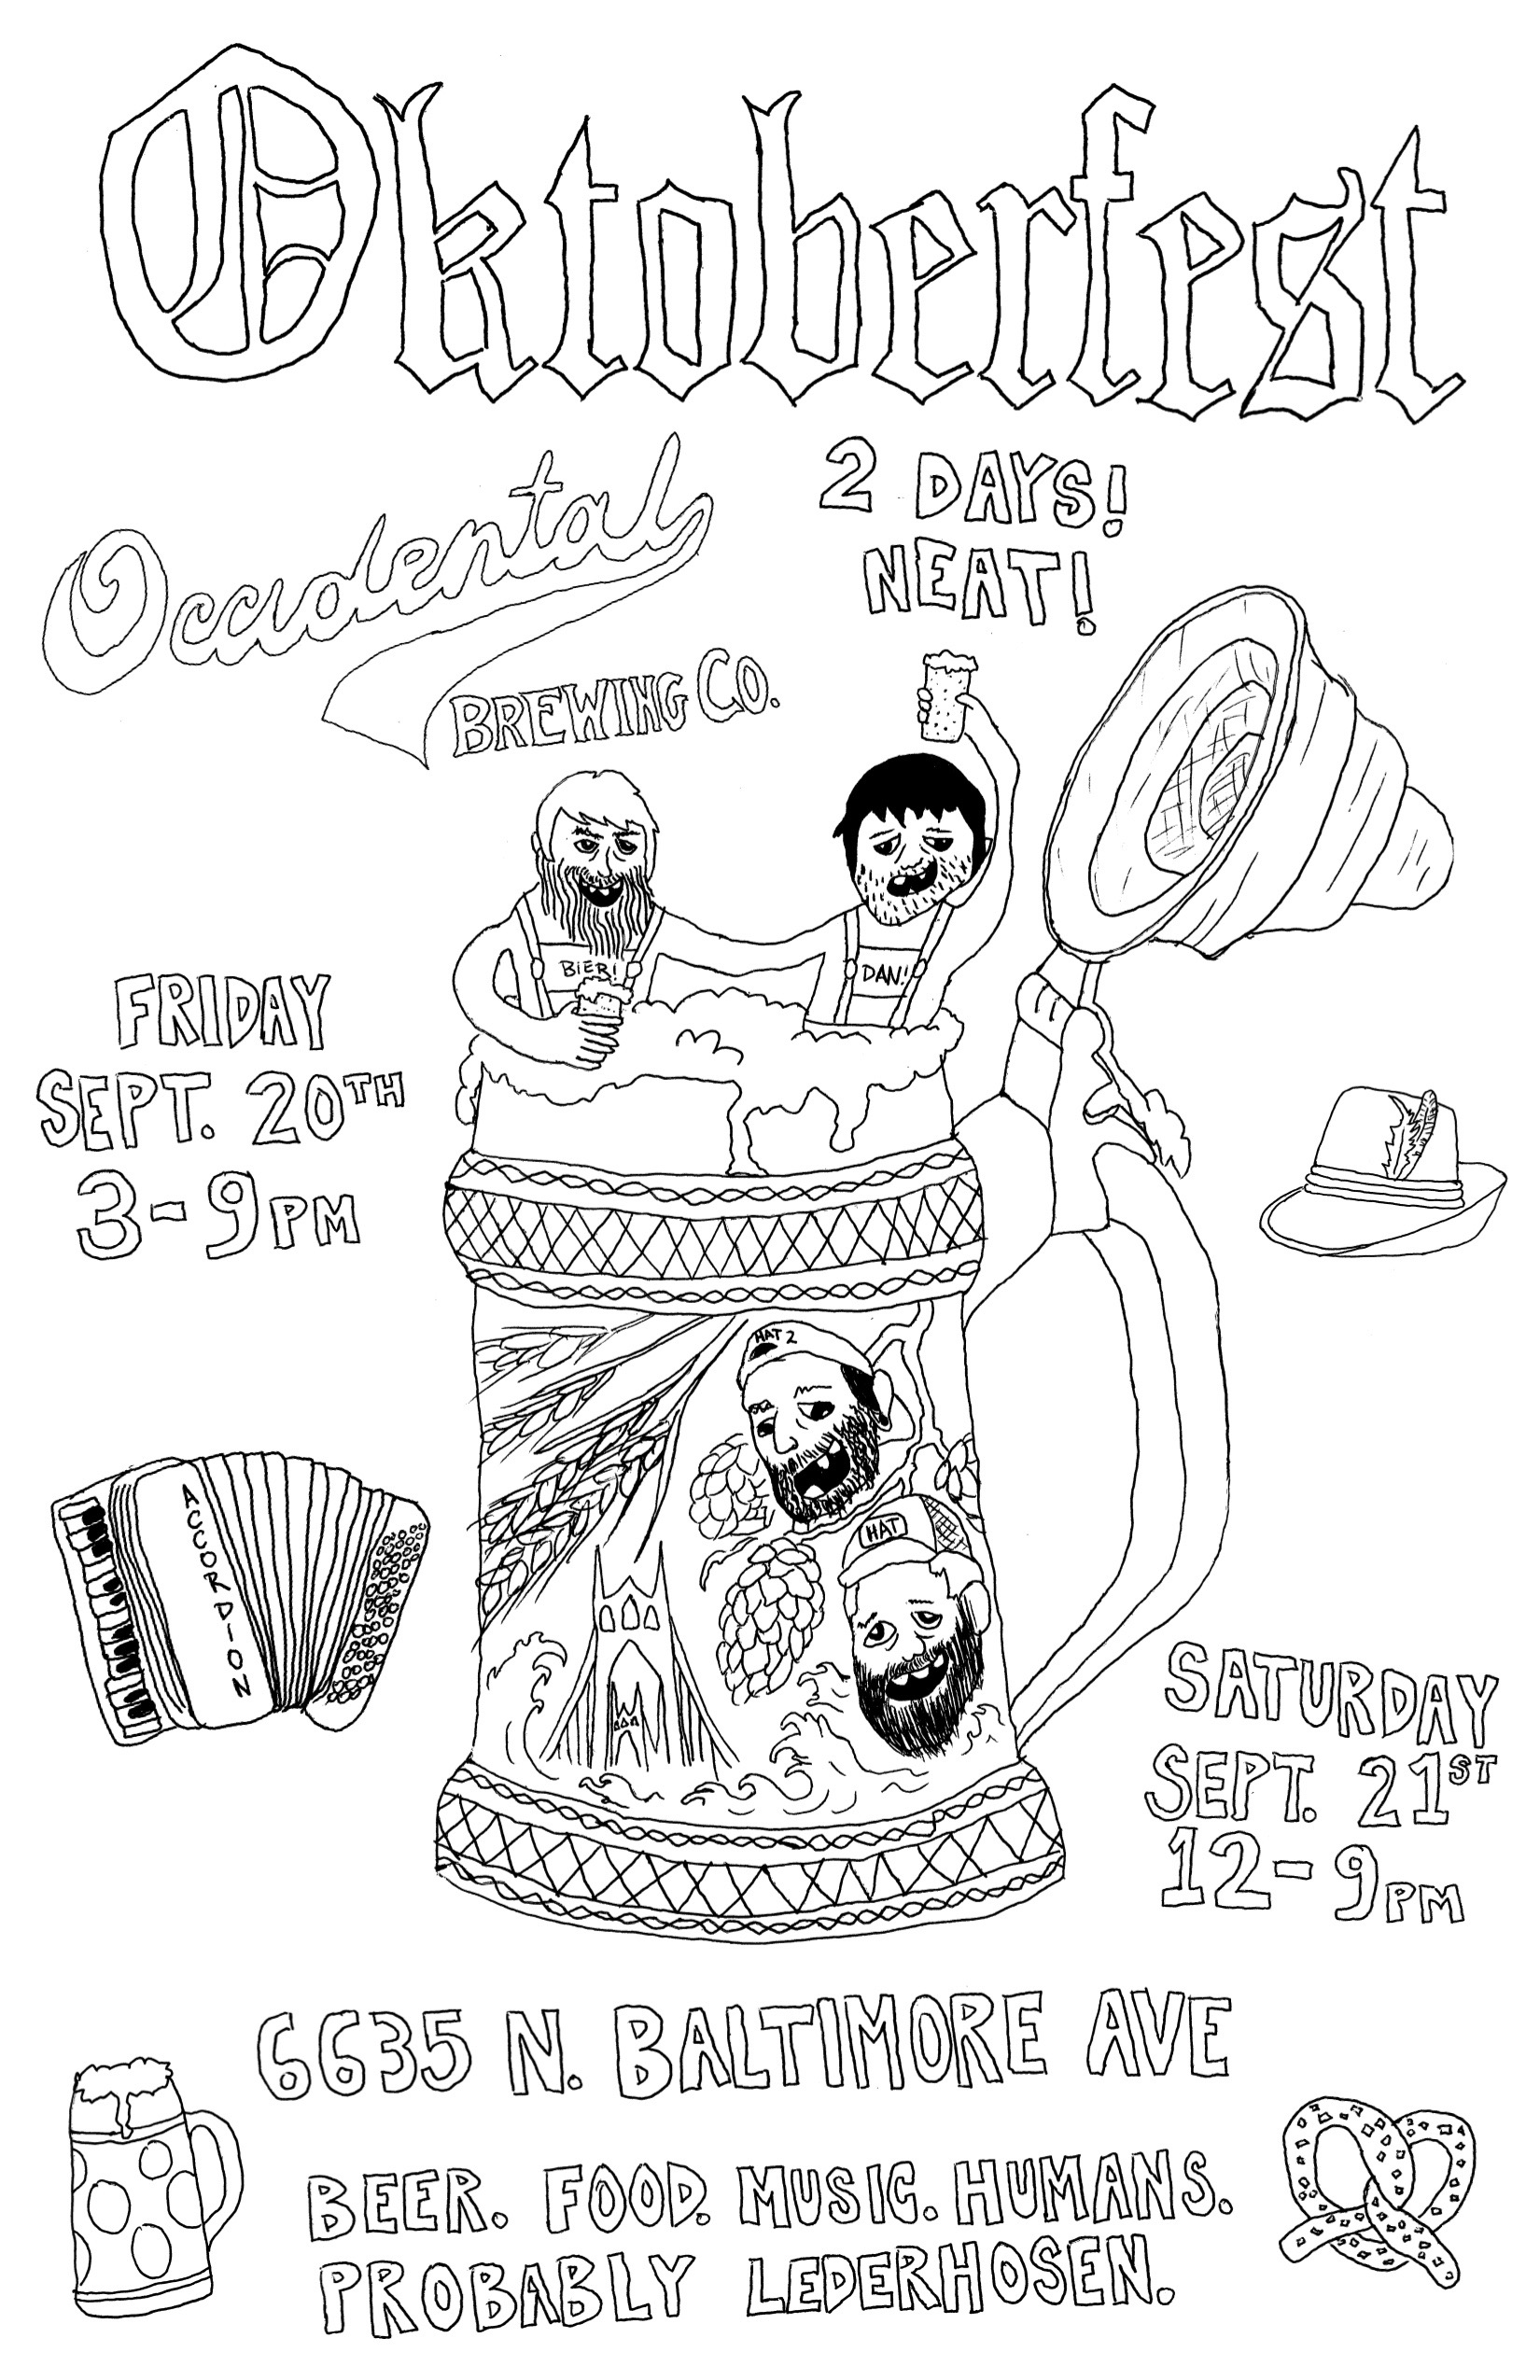 Occidental Brewing Oktoberfest 2019 poster